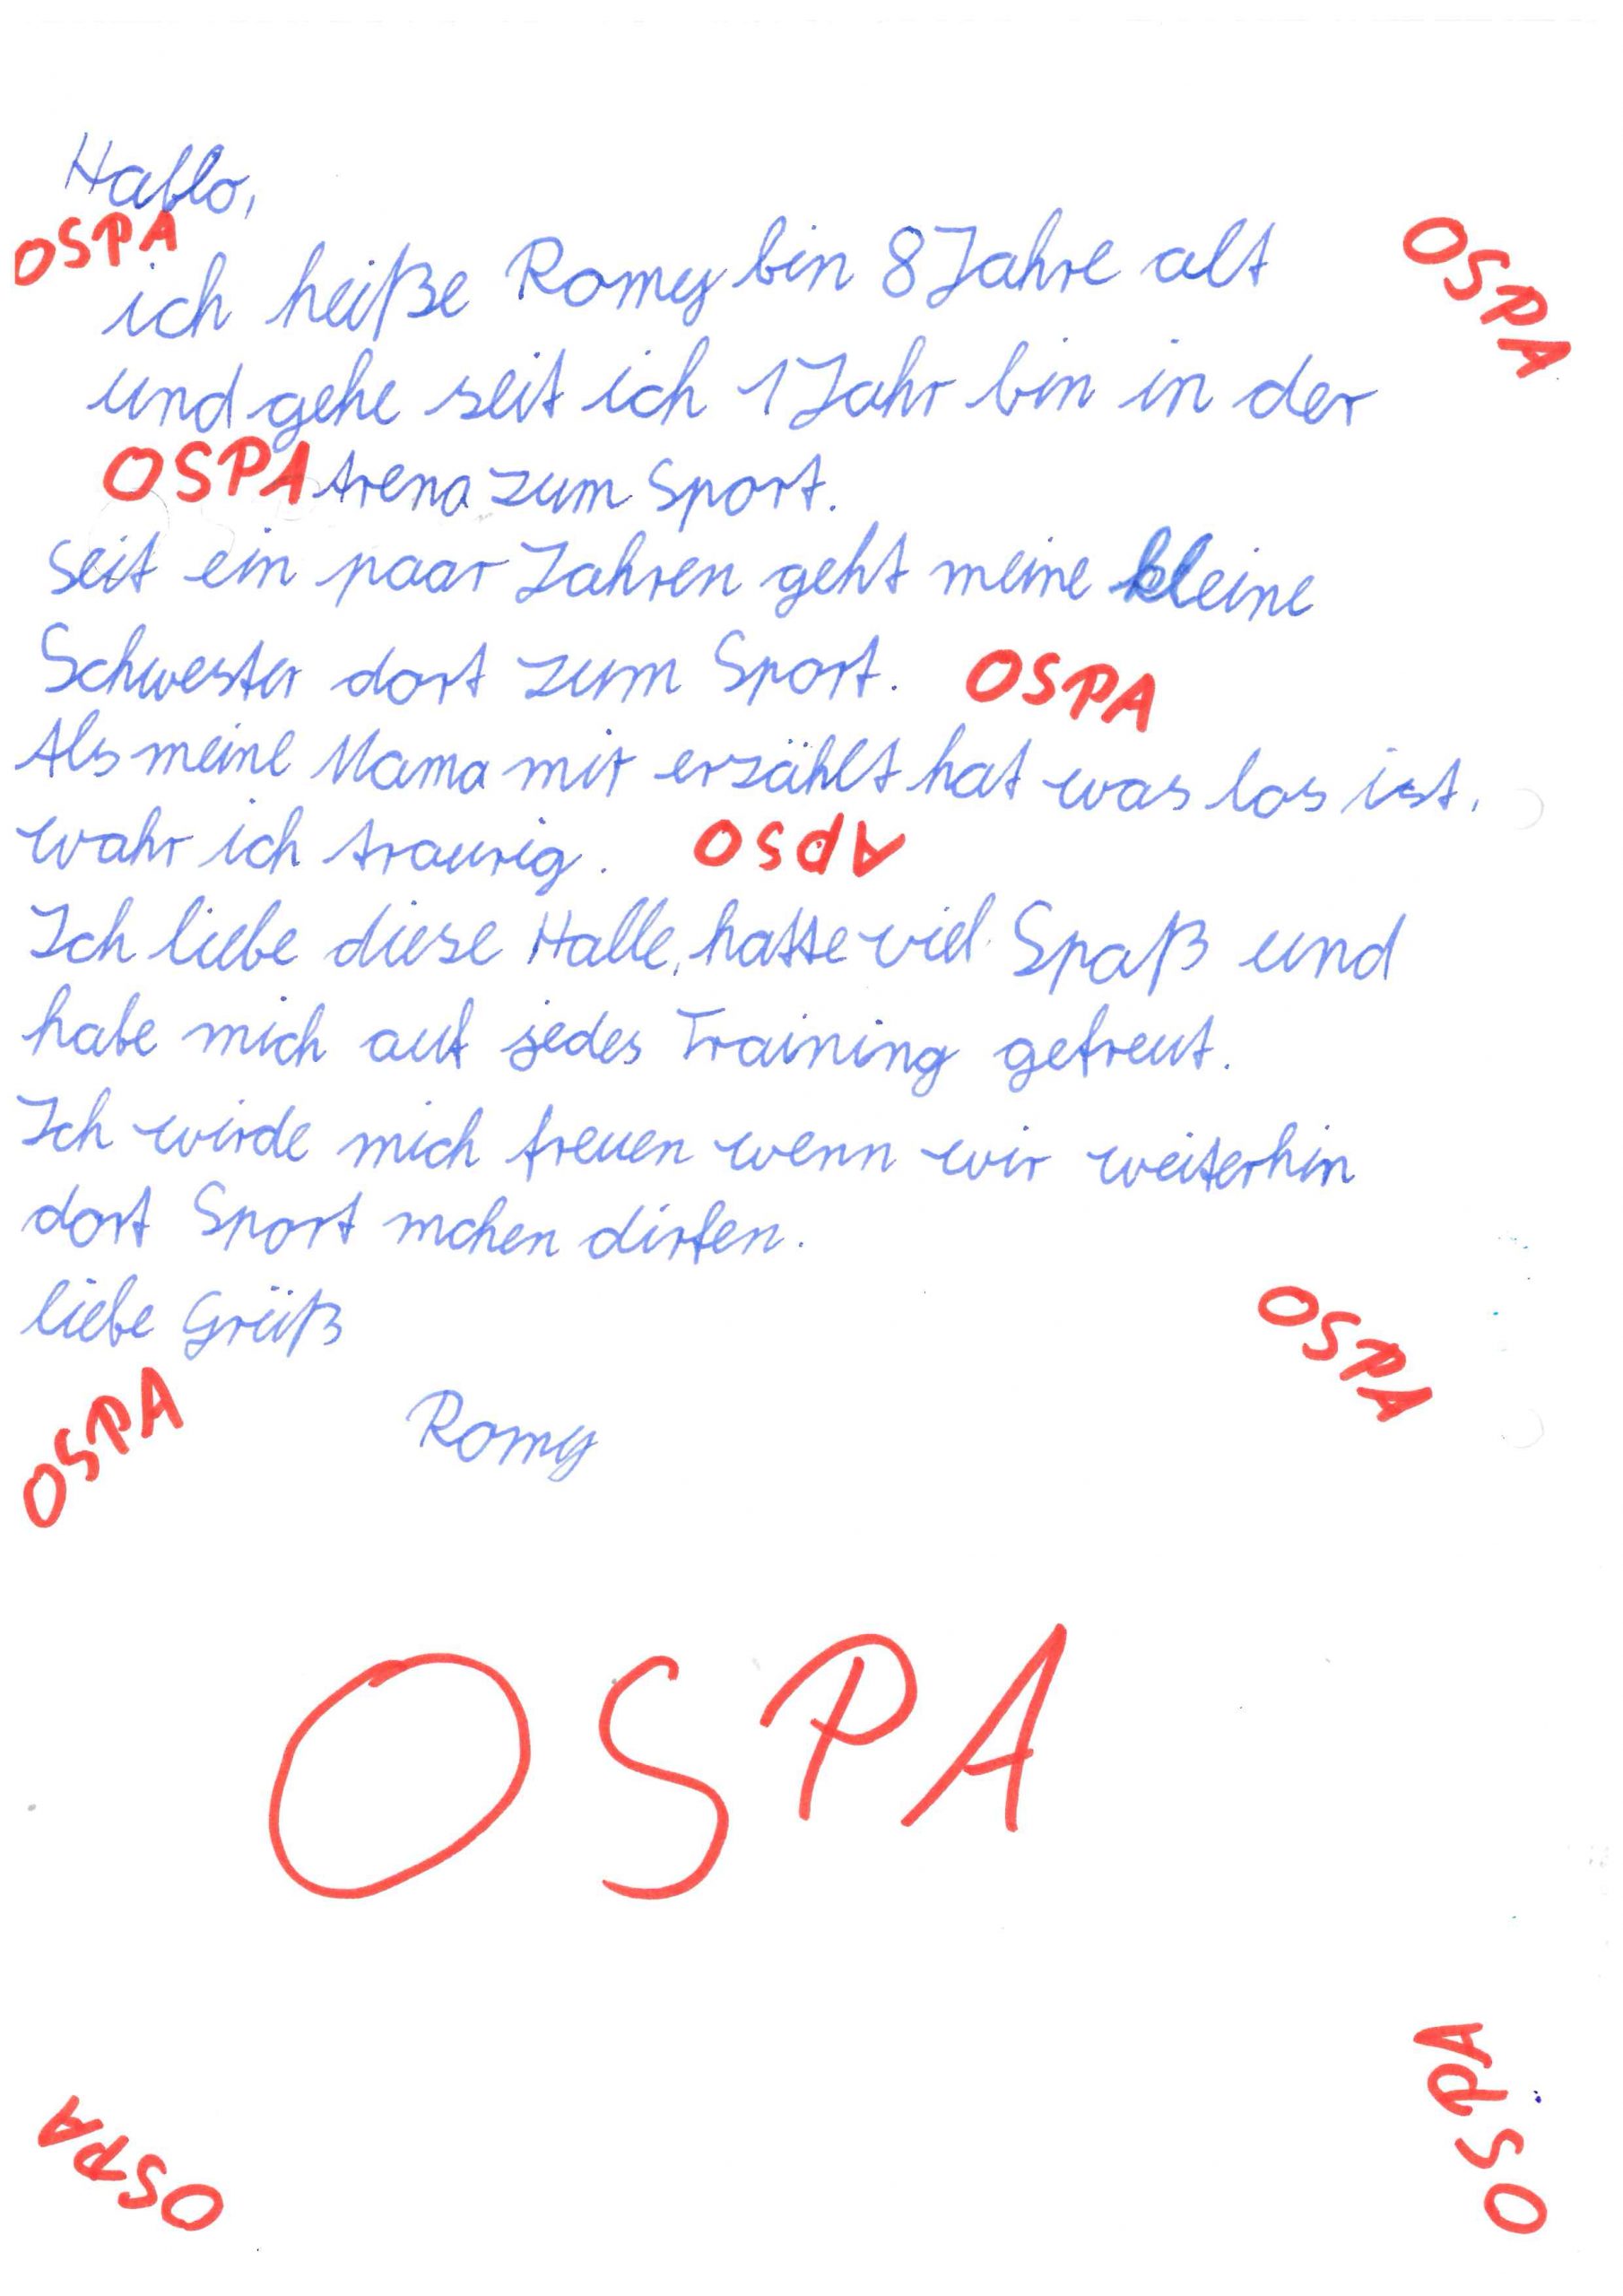 OSPA Arena